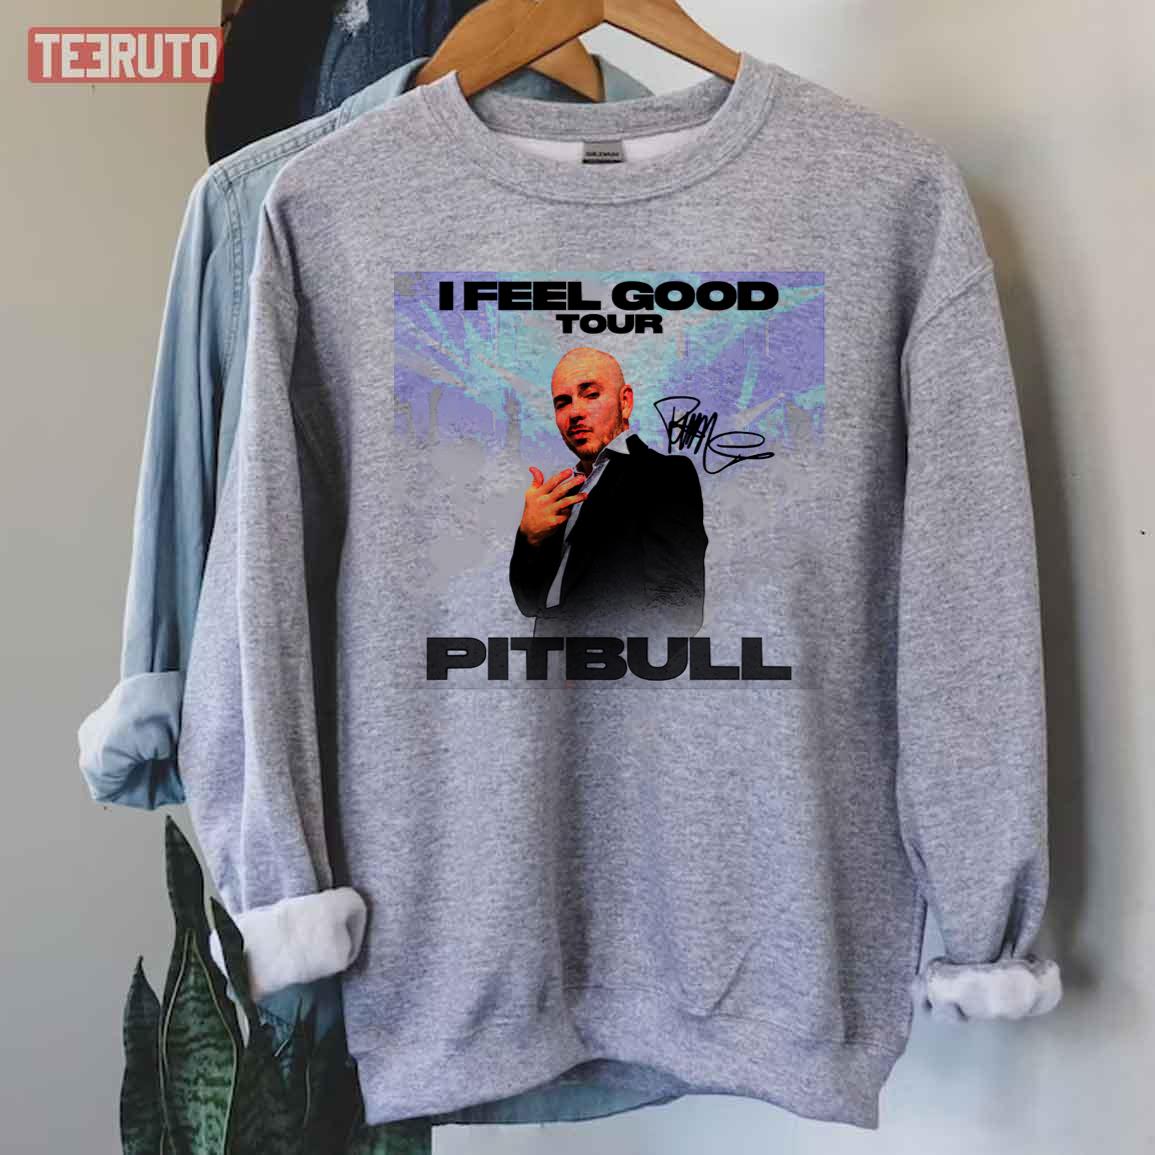 pitbull t shirt mr worldwide